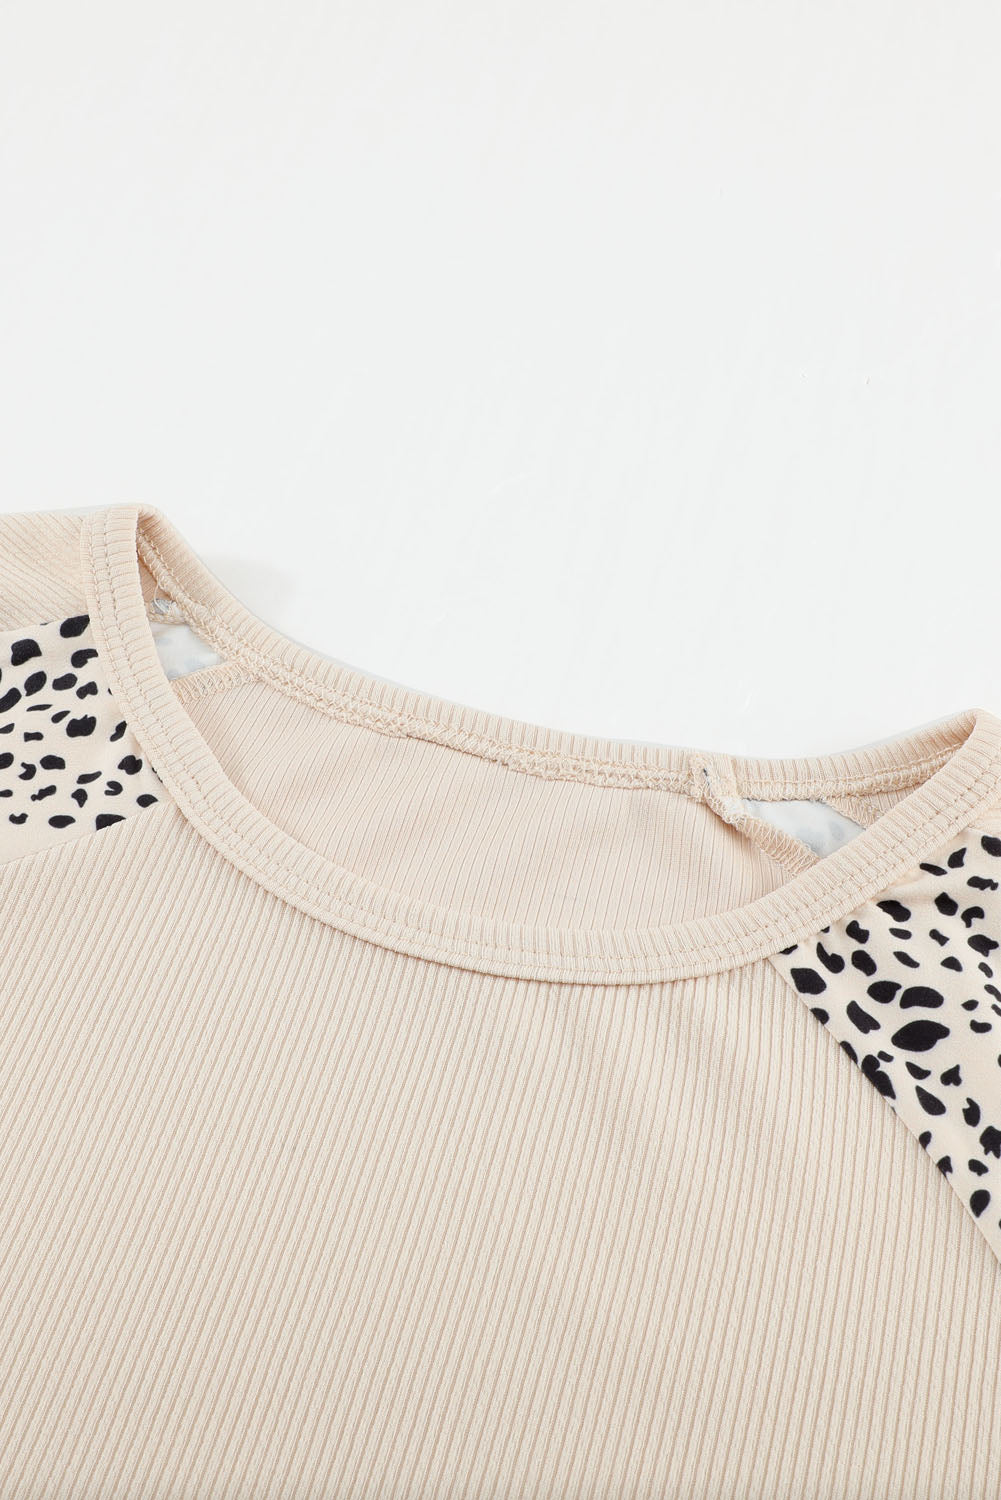 Top pulover z leopardjim vzorcem